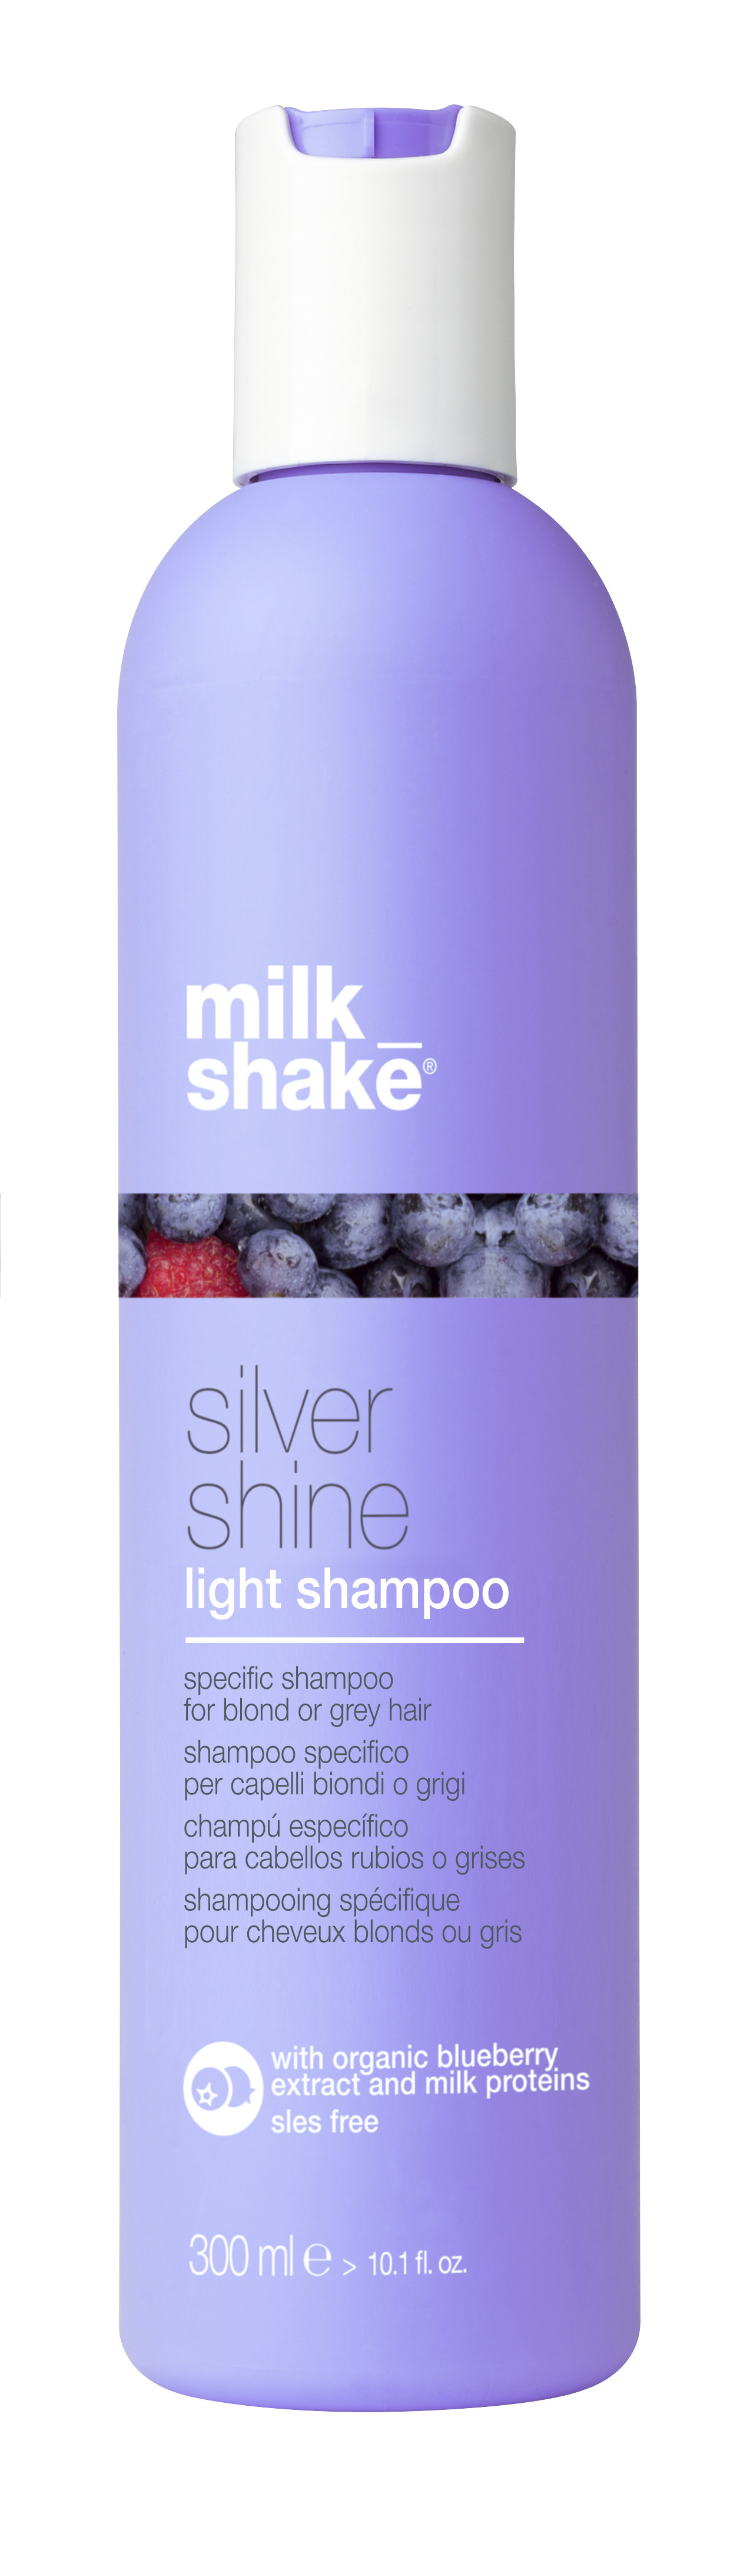 Ørken spids Land med statsborgerskab Silver shine Milk Shake Shampoo 300ml